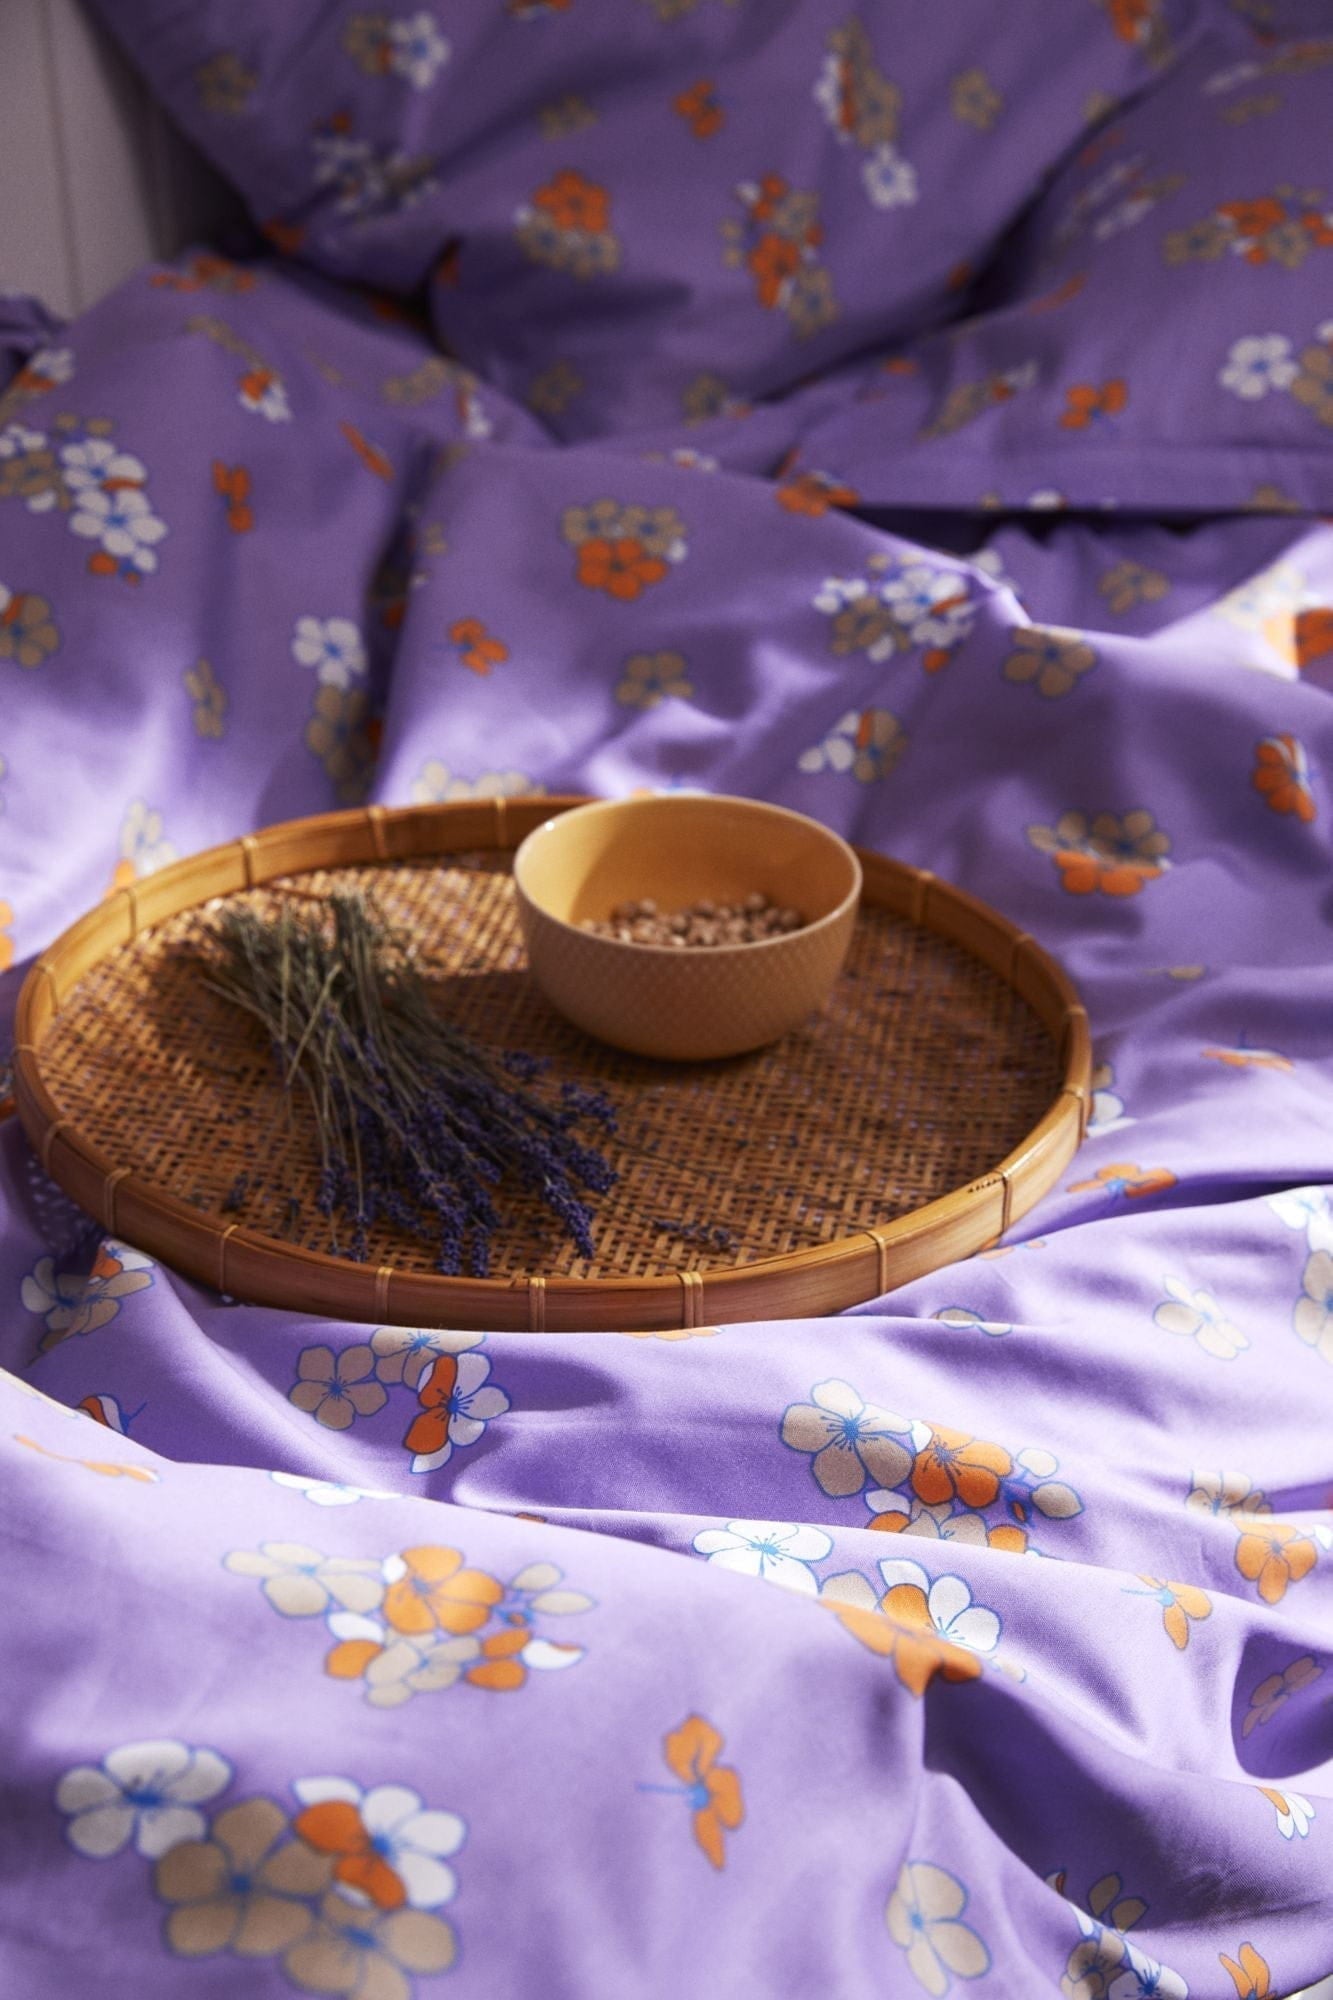 JUNA Stora behagligt sängkläder 140x200 cm, lavendel